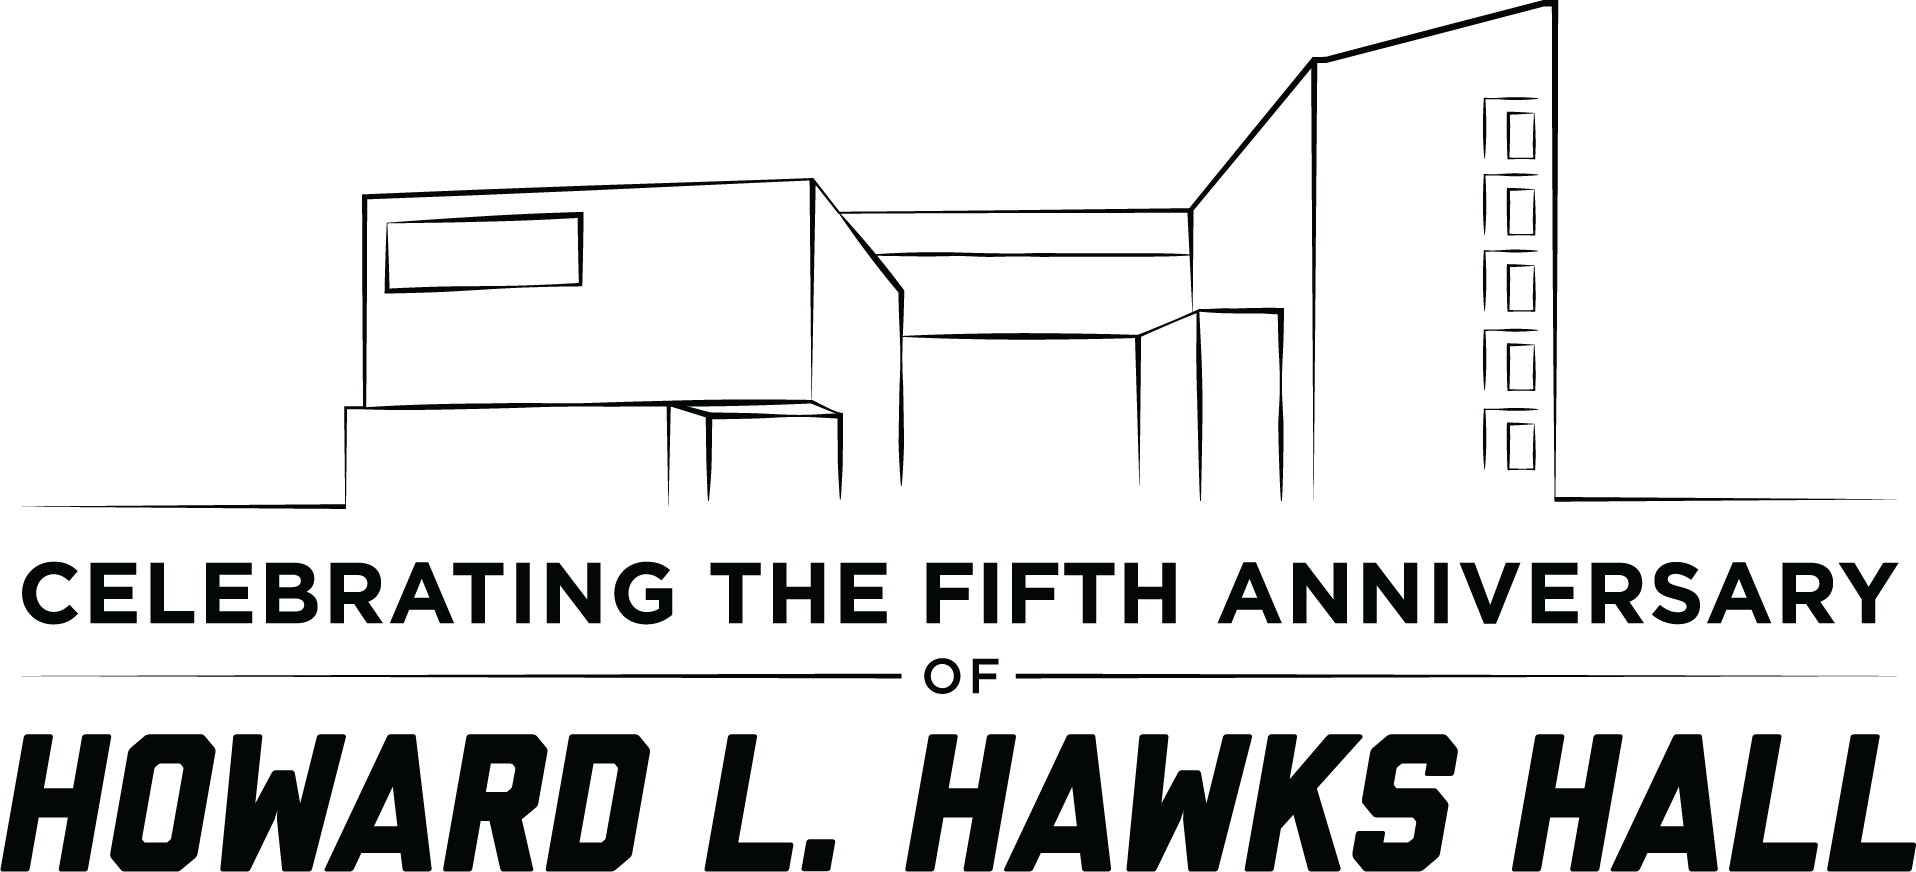 Celebrating the Fifth Anniversary of Howard L. Hawks Hall